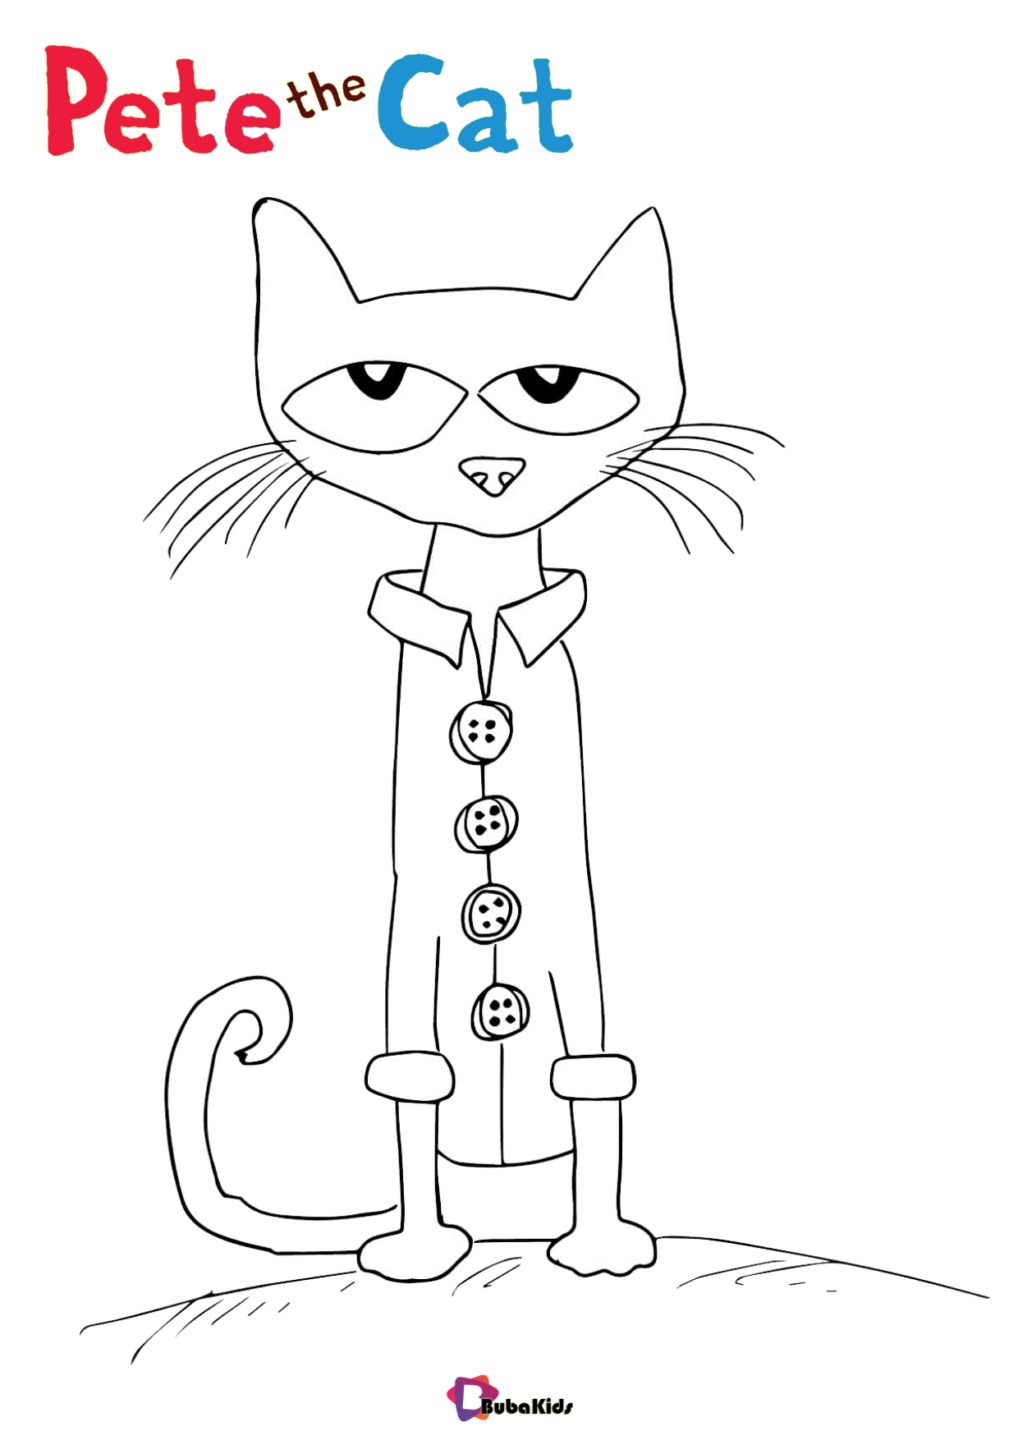 Pete the Cat Cartoon Cat coloring page | BubaKids.com